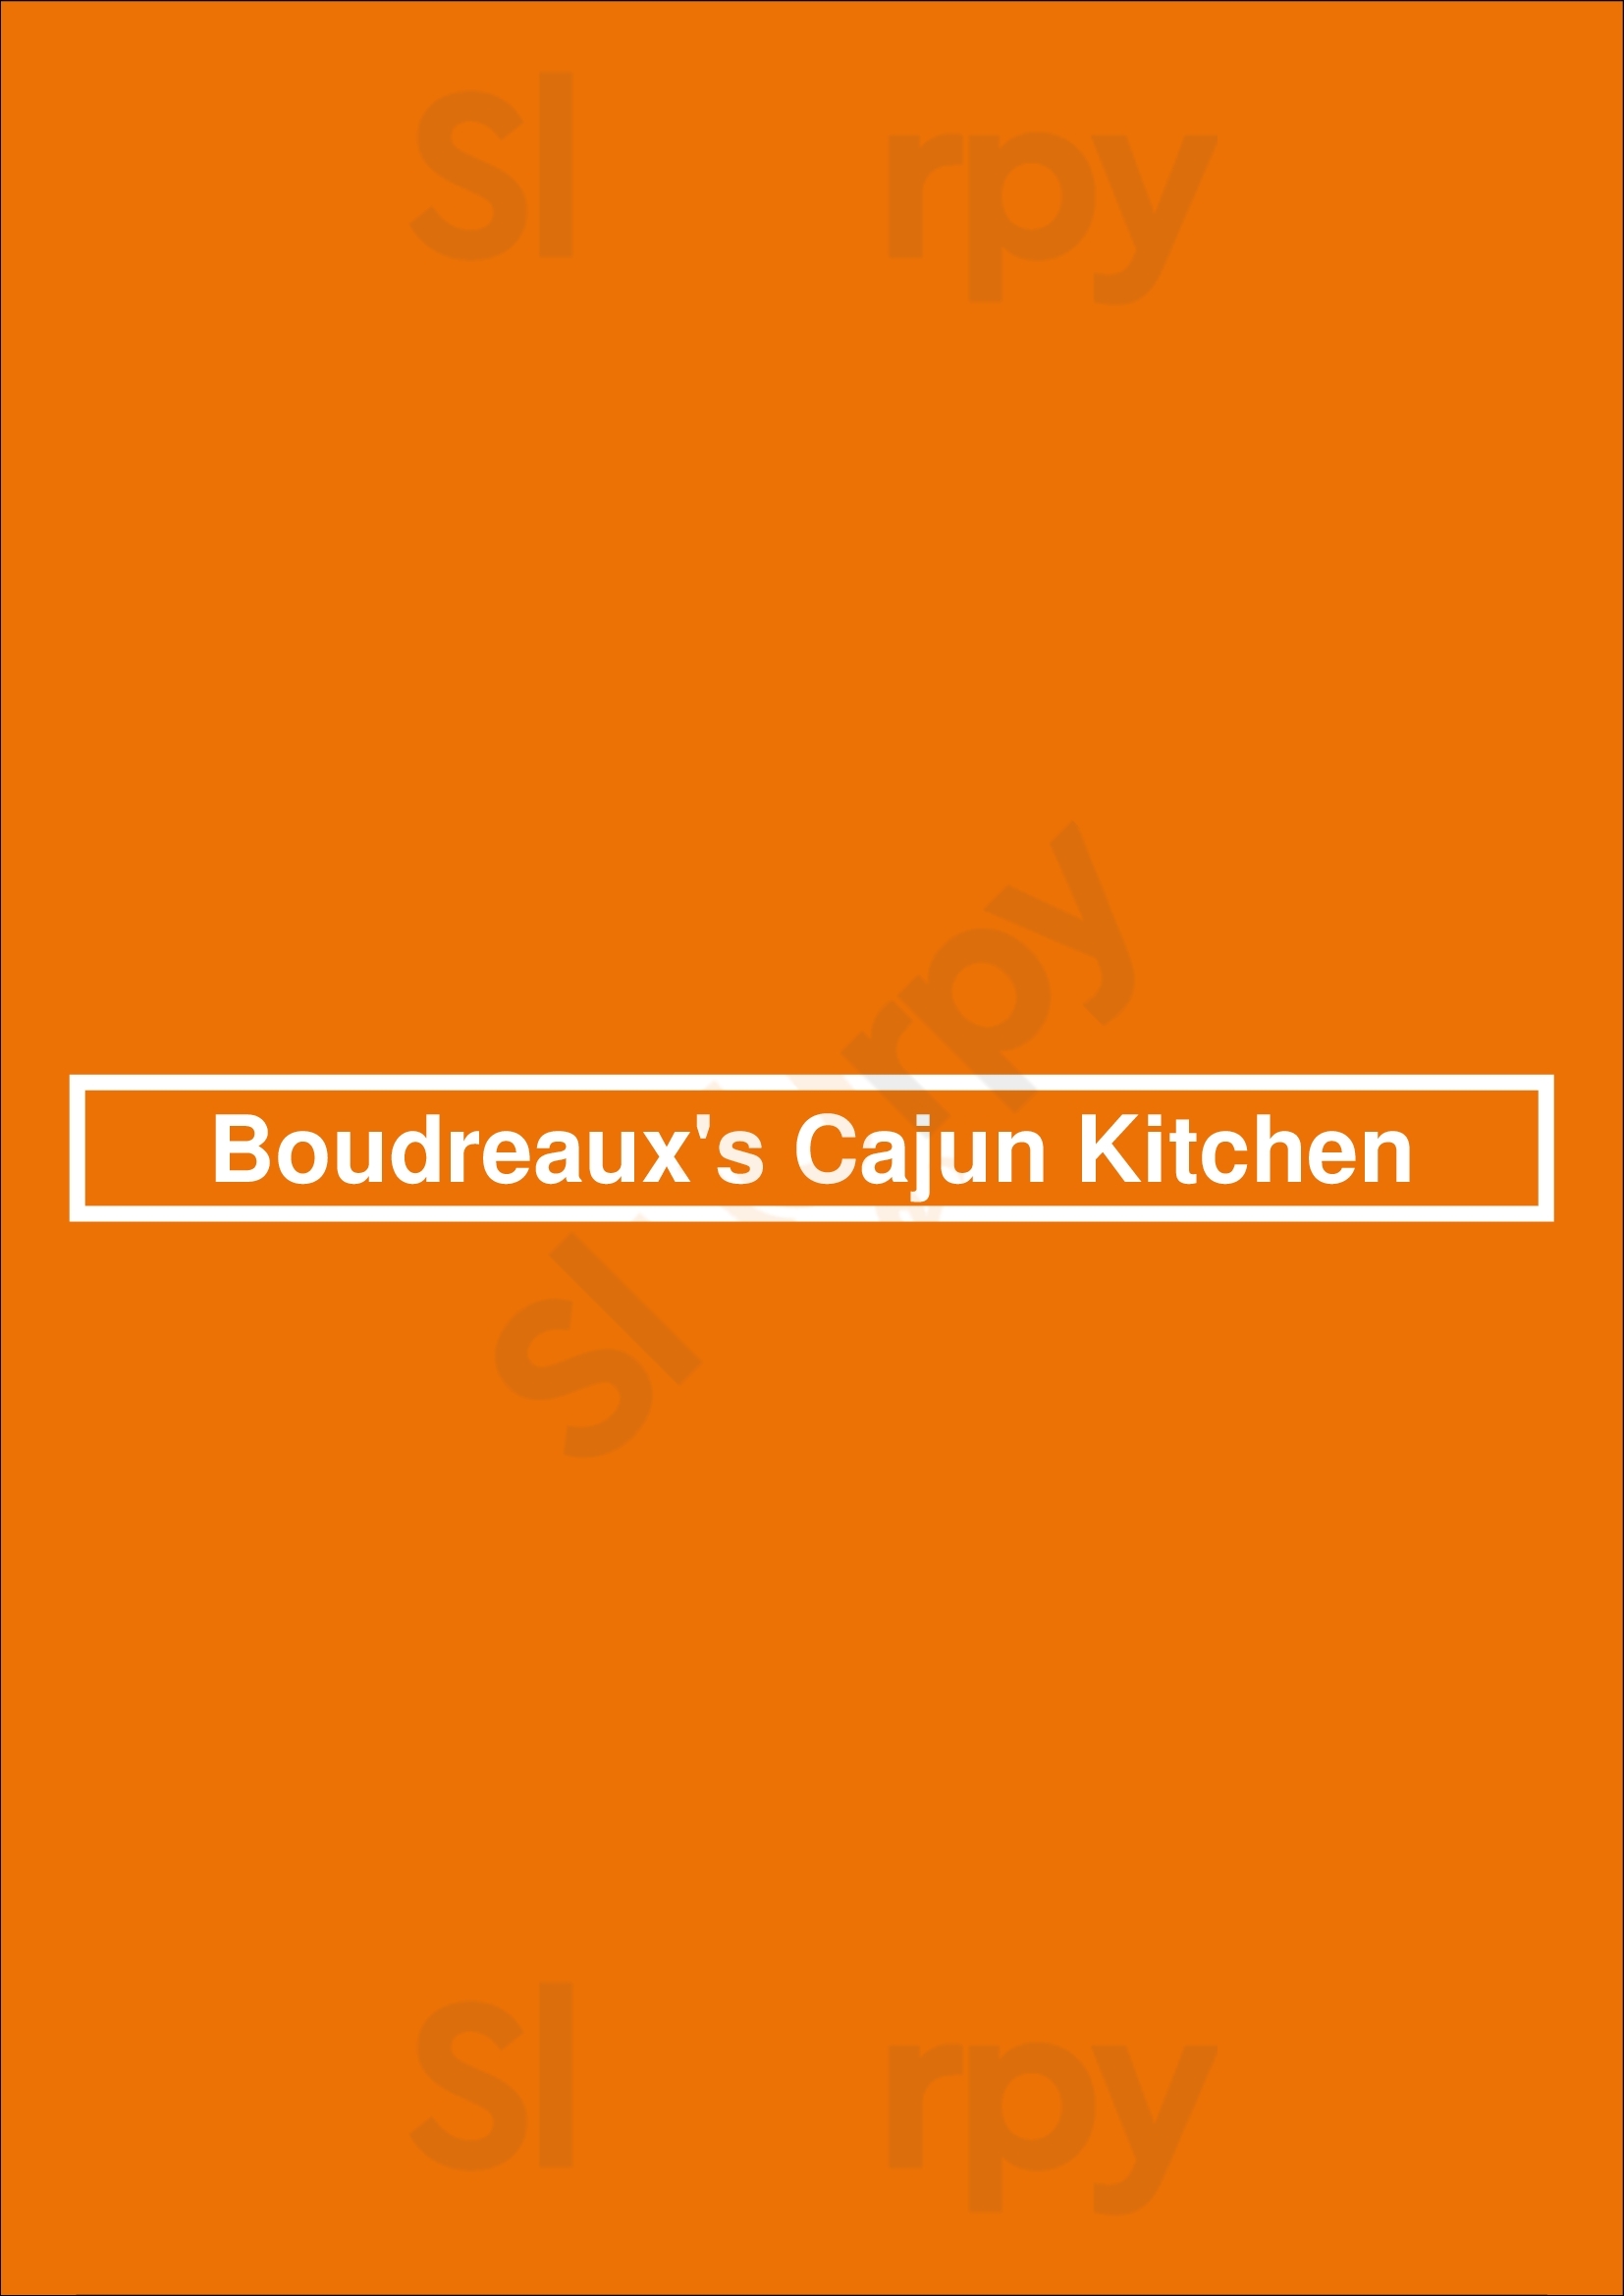 Boudreaux's Cajun Kitchen Houston Menu - 1